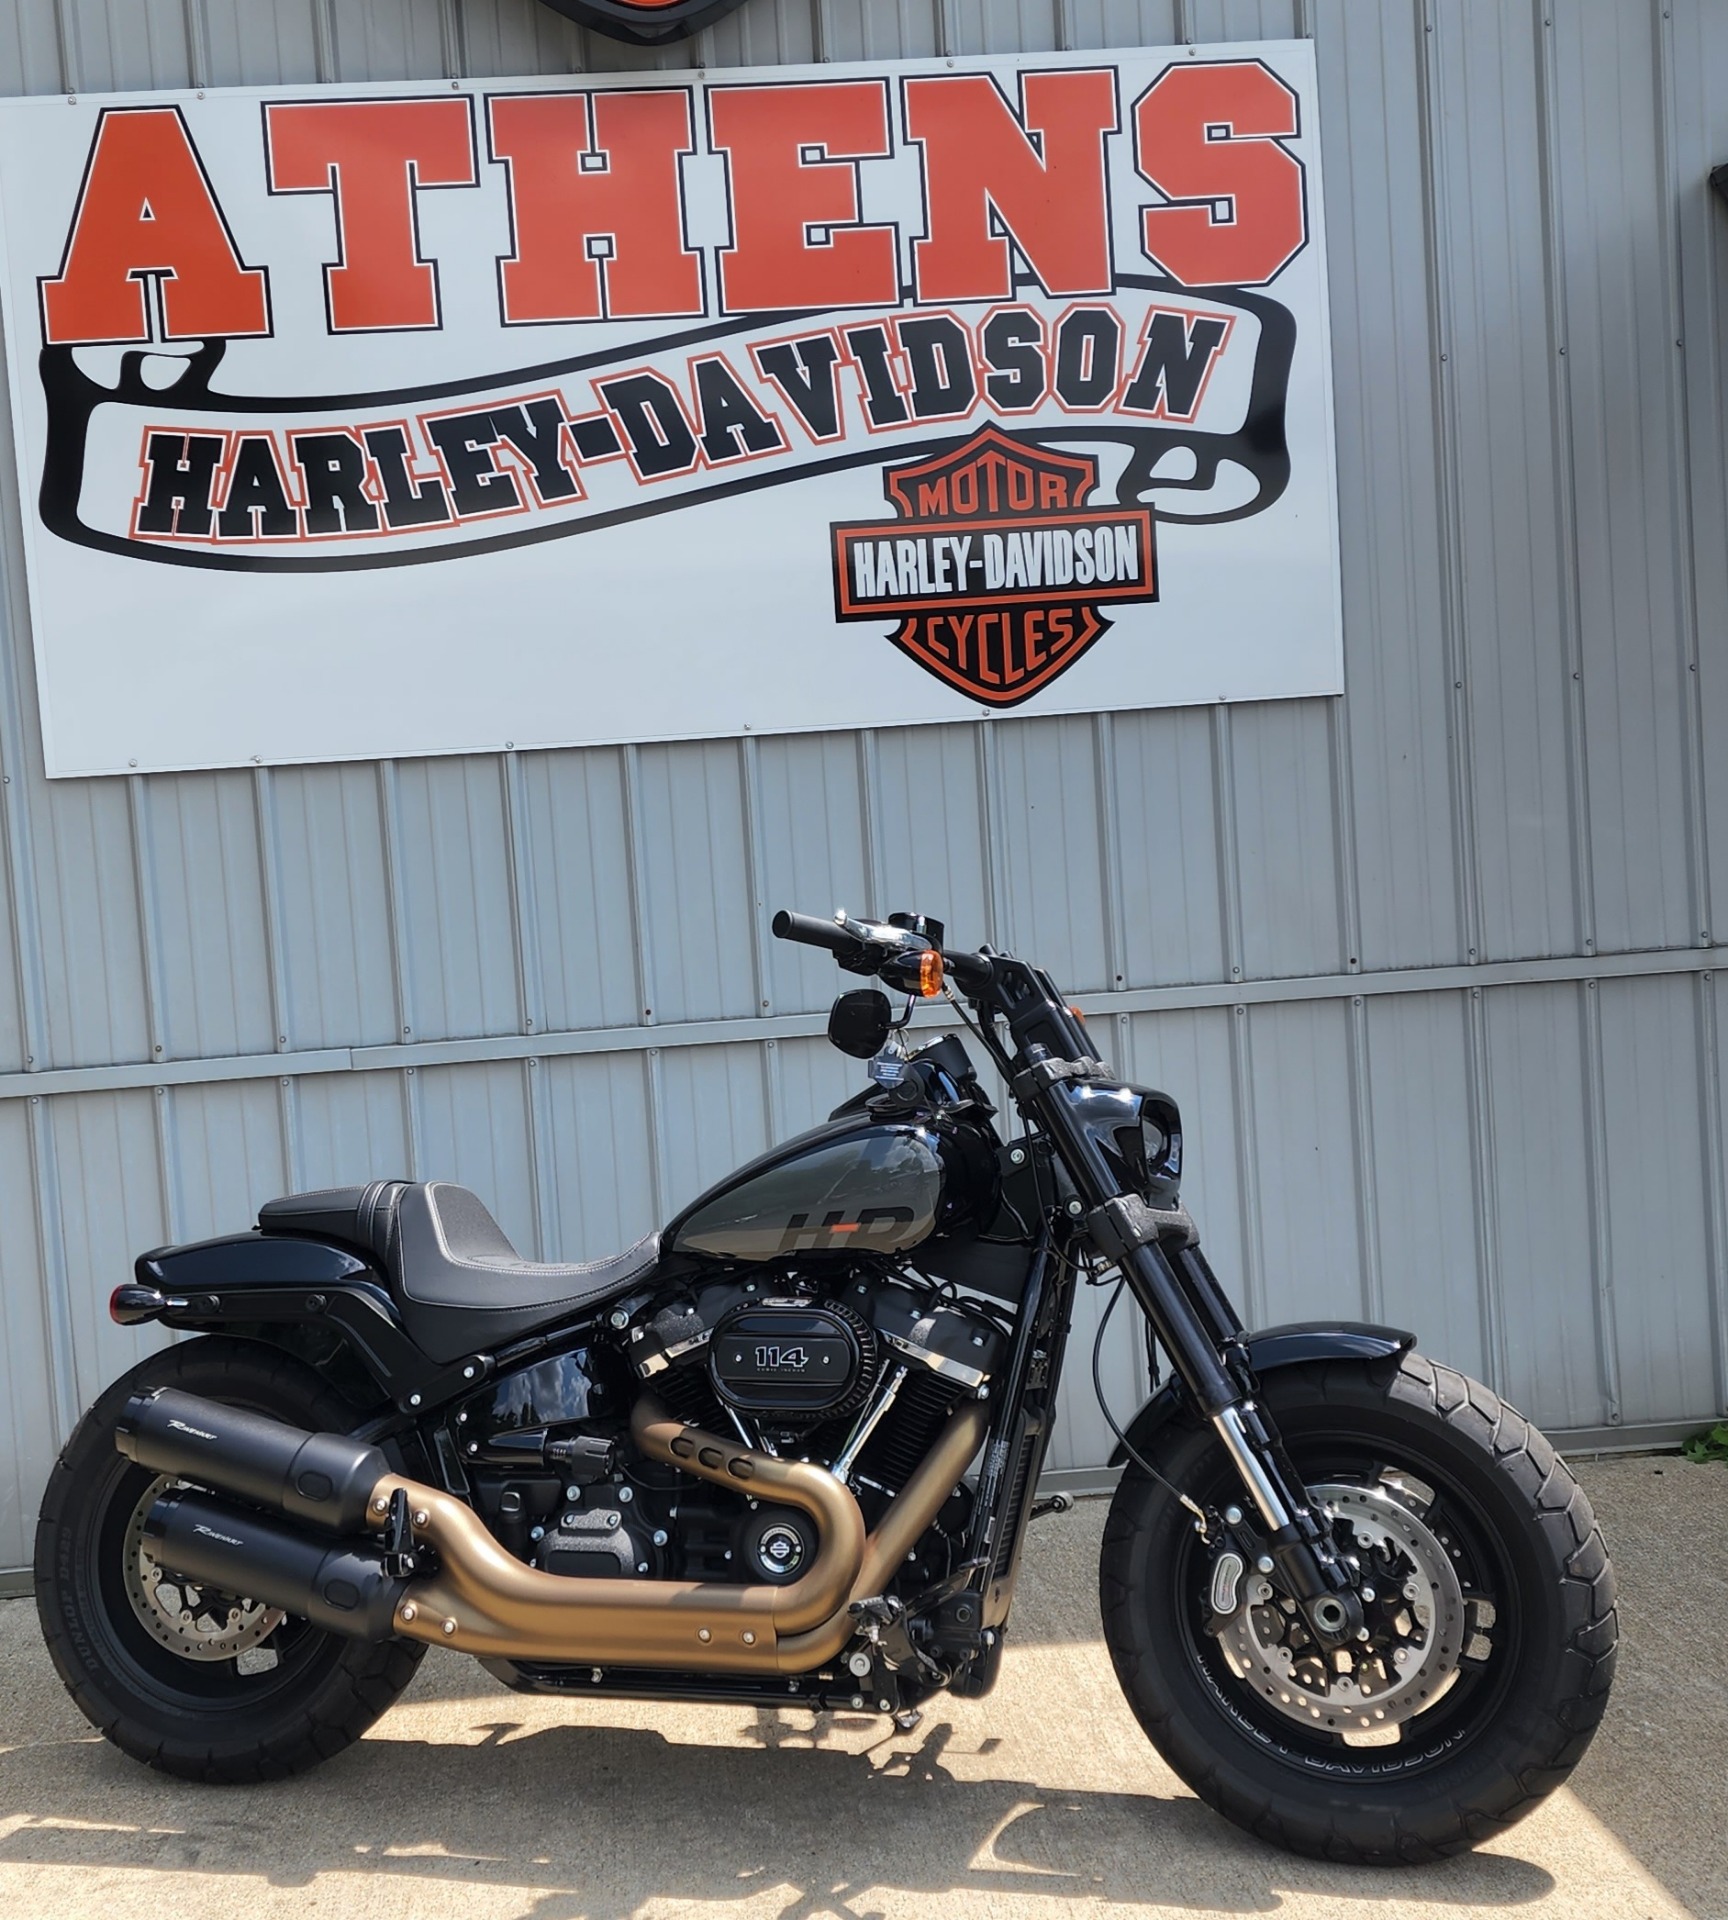 2022 Harley-Davidson Fat Bob® 114 in Athens, Ohio - Photo 1